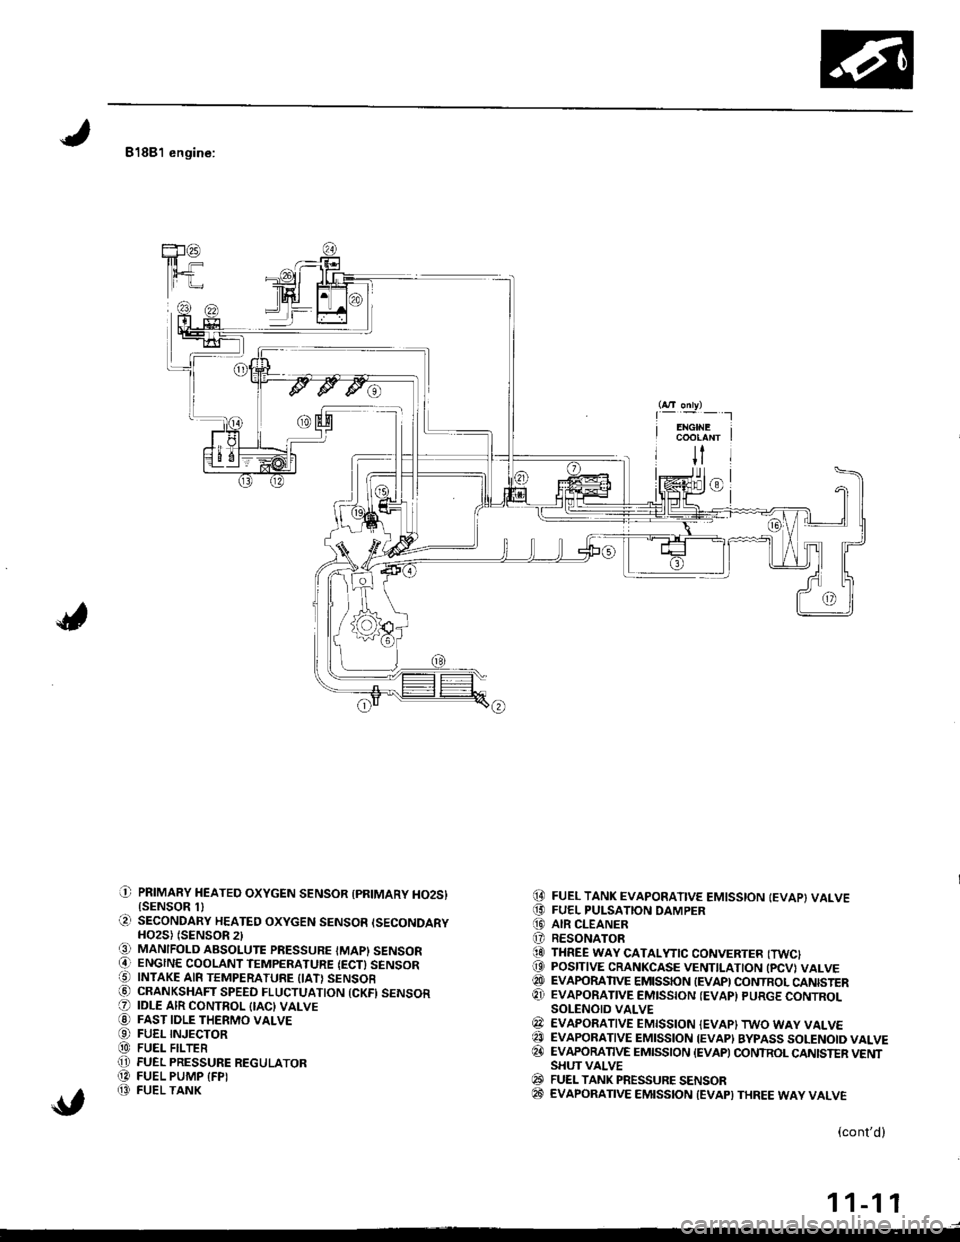 HONDA INTEGRA 1998 4.G Workshop Manual 81881 engine:
O PRIMARY HEATED OXYGEN SENSOR {PRIMARY HO2S}{SENSOR 1}( SECoNDARY HEATED oxYGEN sENsoR (sEcoNDARYHO2S) (SENSOR 2l€) MANIFoLD ABSoLUTE PRESSURE IMAP} sENsoRq] ENGINE COOLANT TEMPERATU